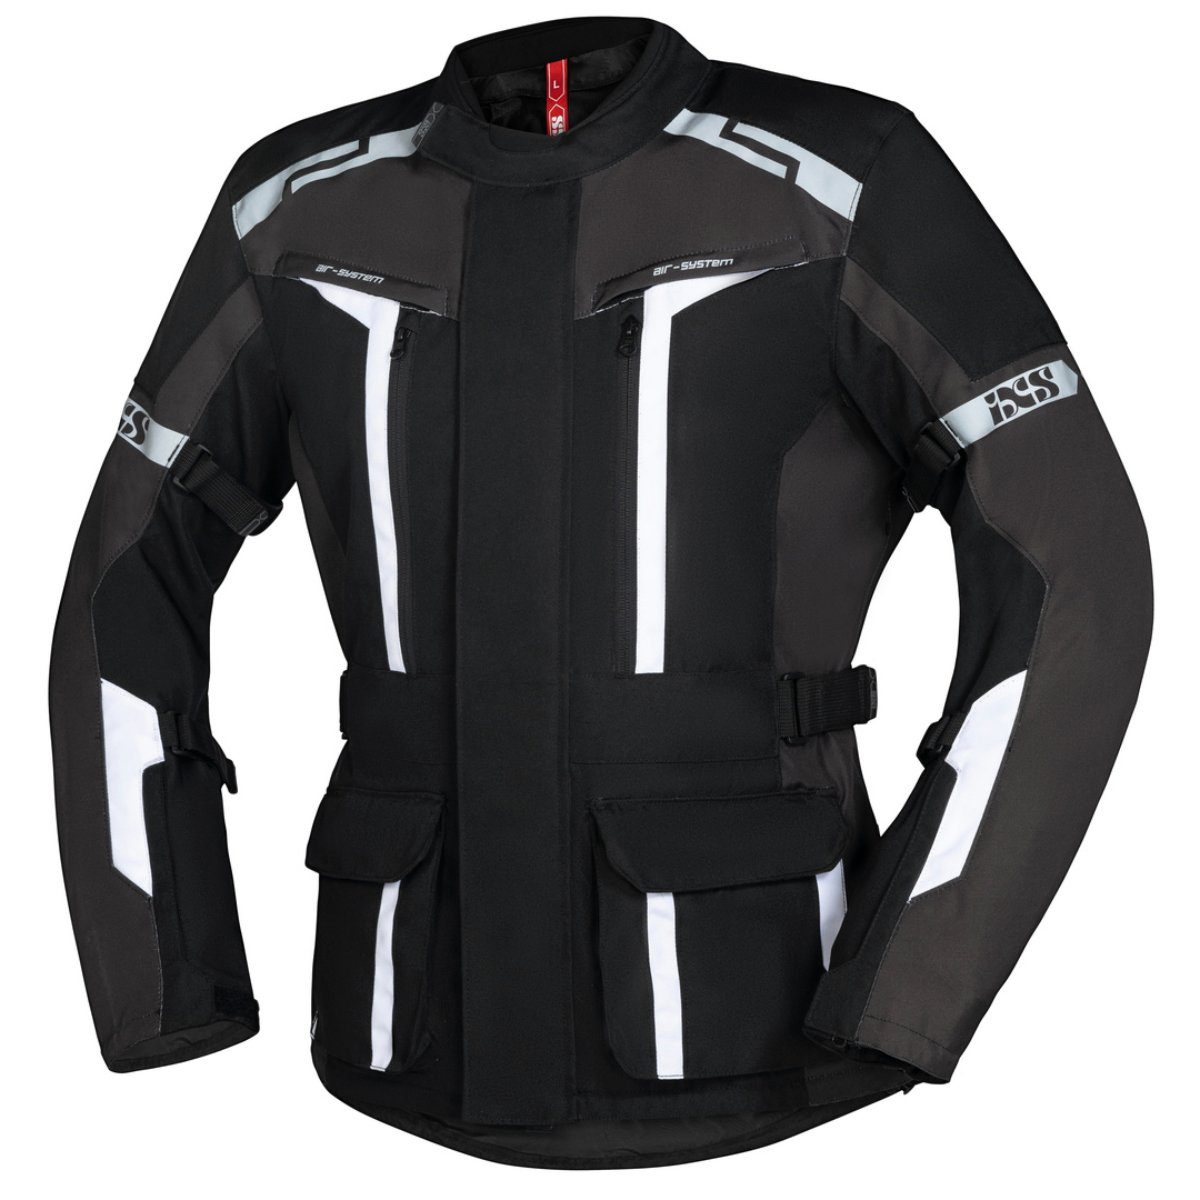 IXS Motorradjacke Evans-ST iXS Black/Grey/White 2.0 grau / Herren schwarz / weiß Textiljacke